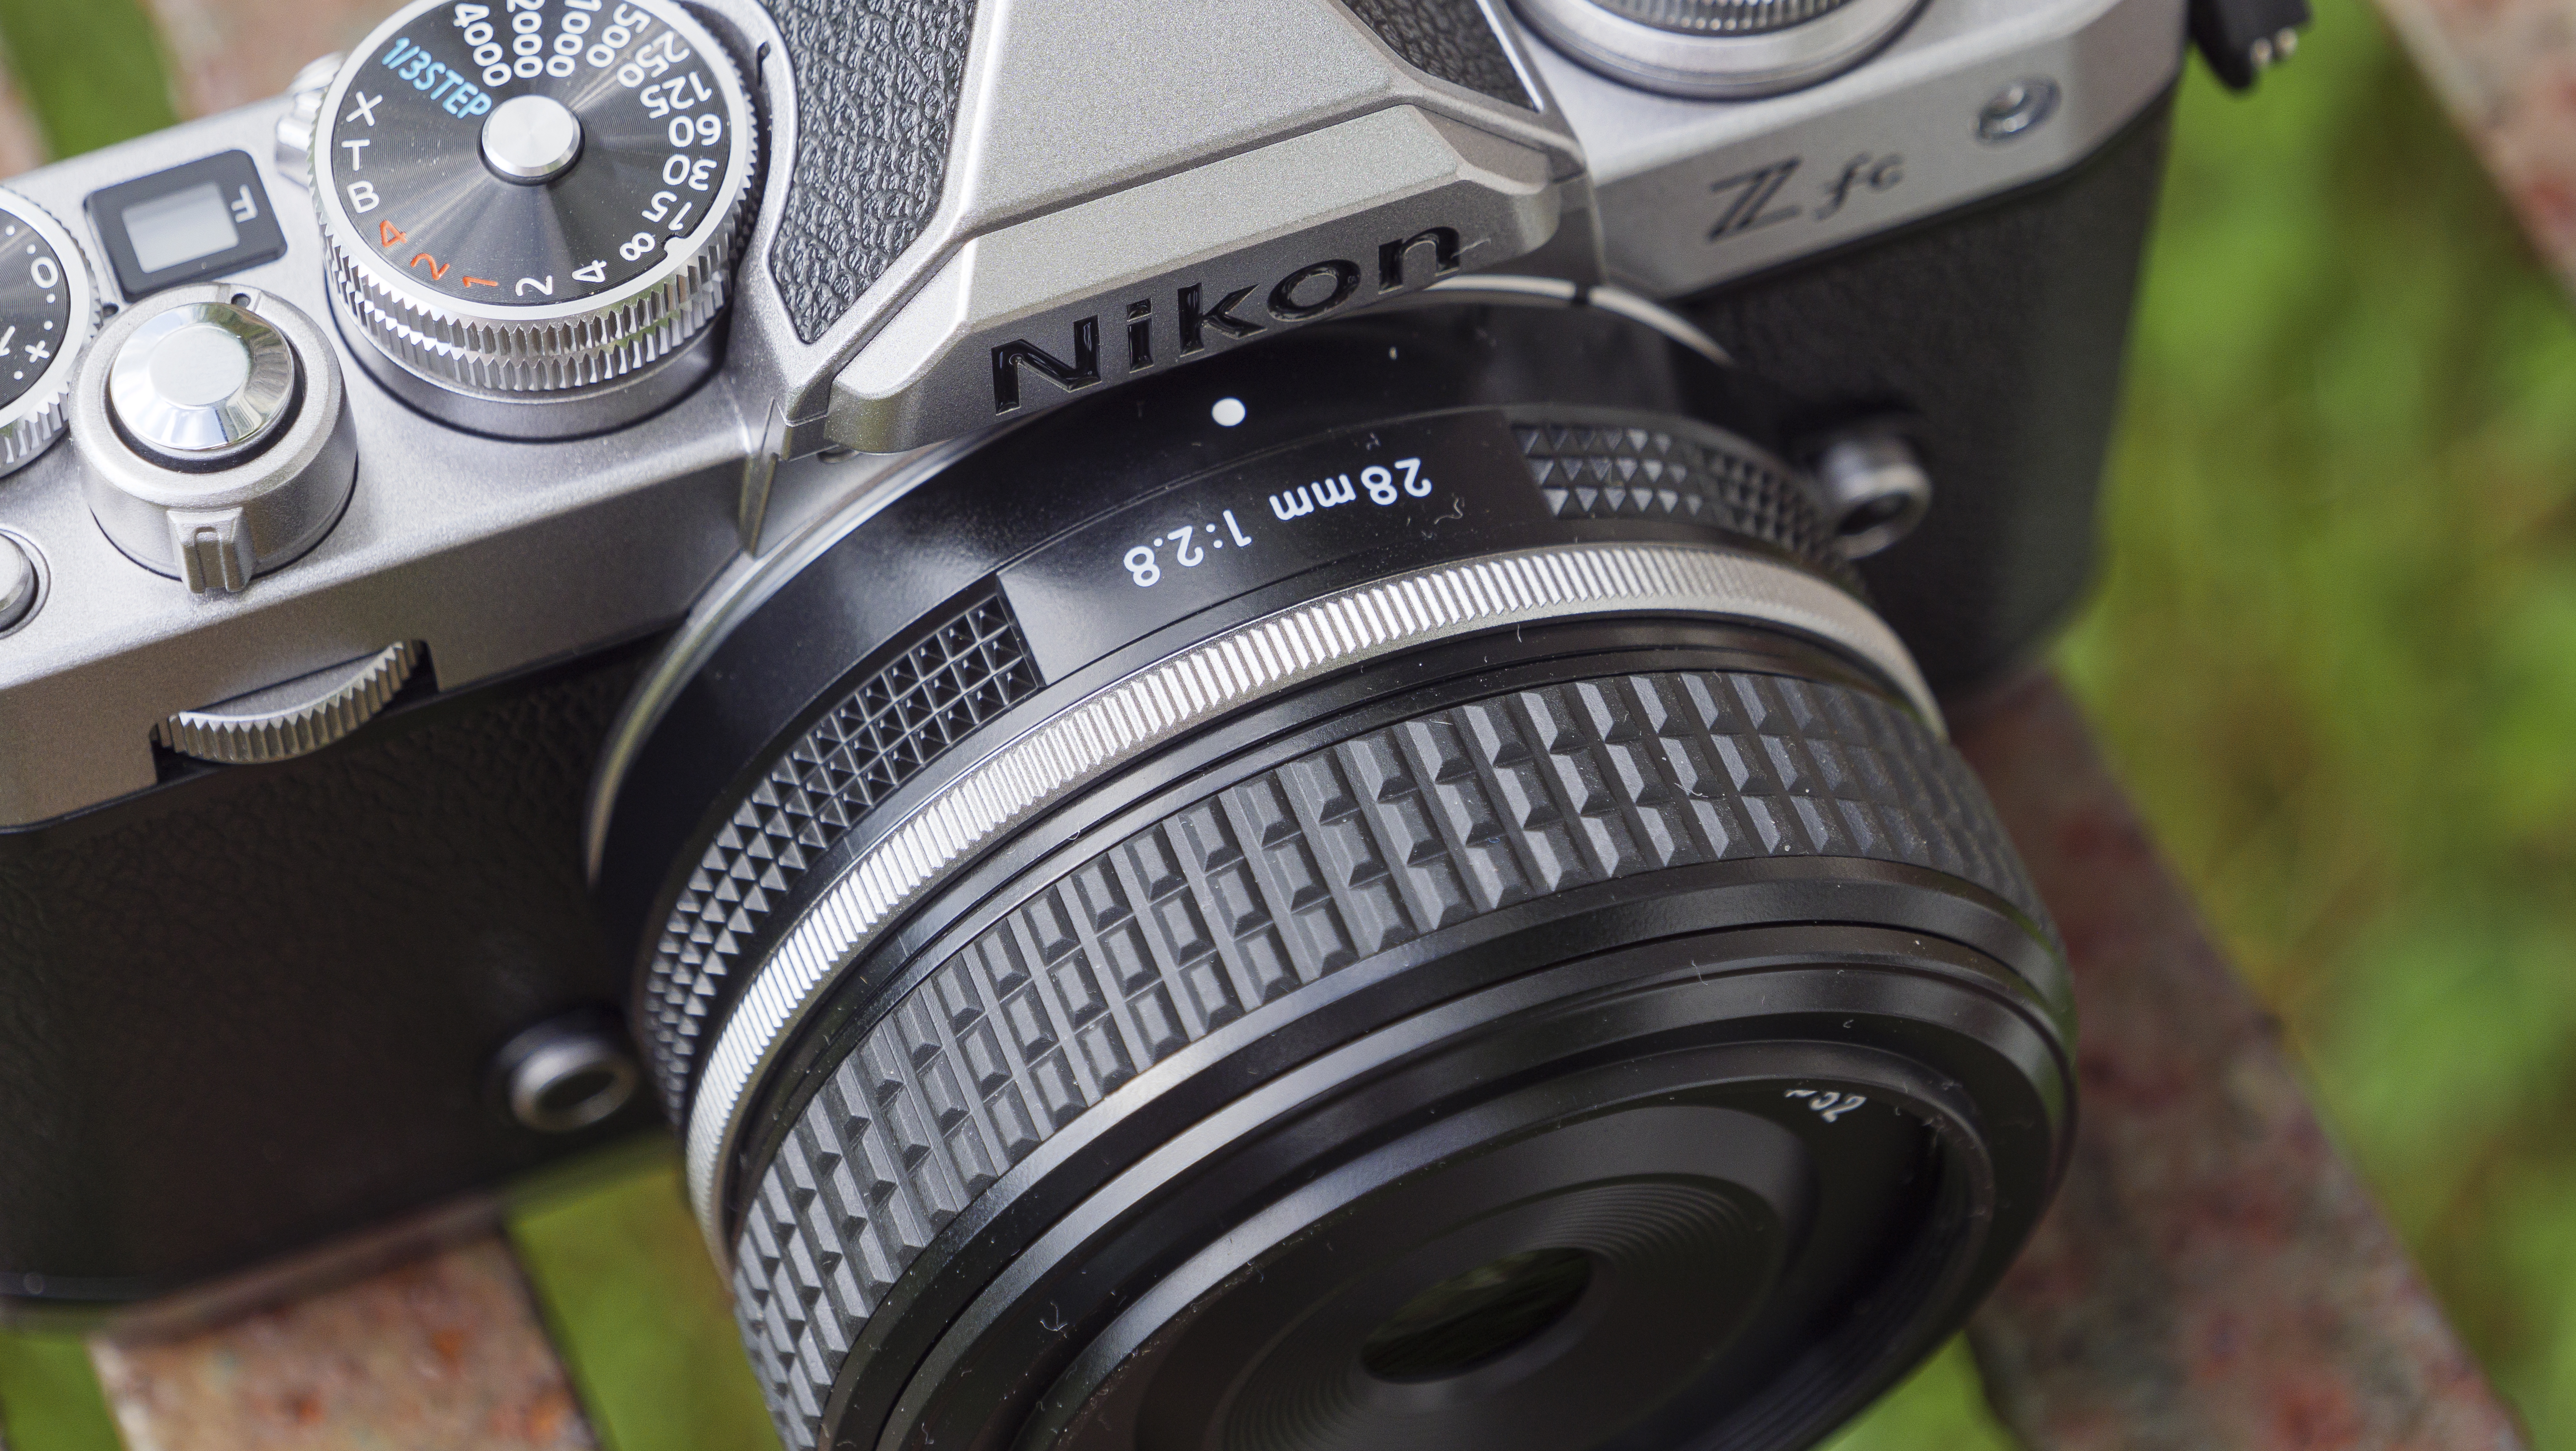 The kit lens of the Nikon Z fc camera